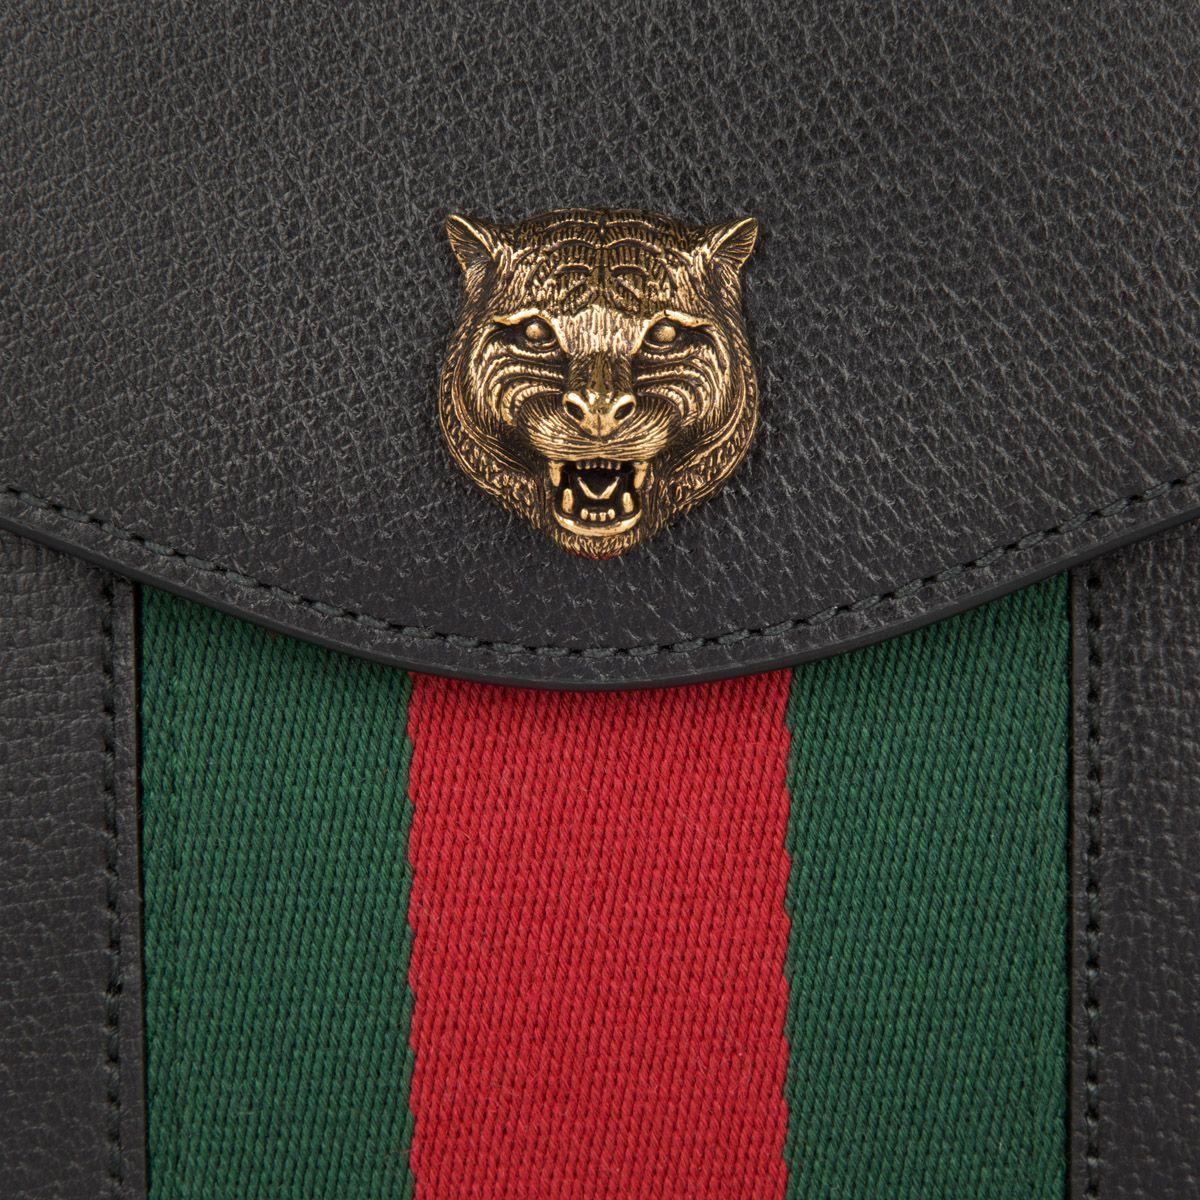 Gucci Lion Logo - Gucci Lion Leather Crossbody Bag Black in black | fashionette